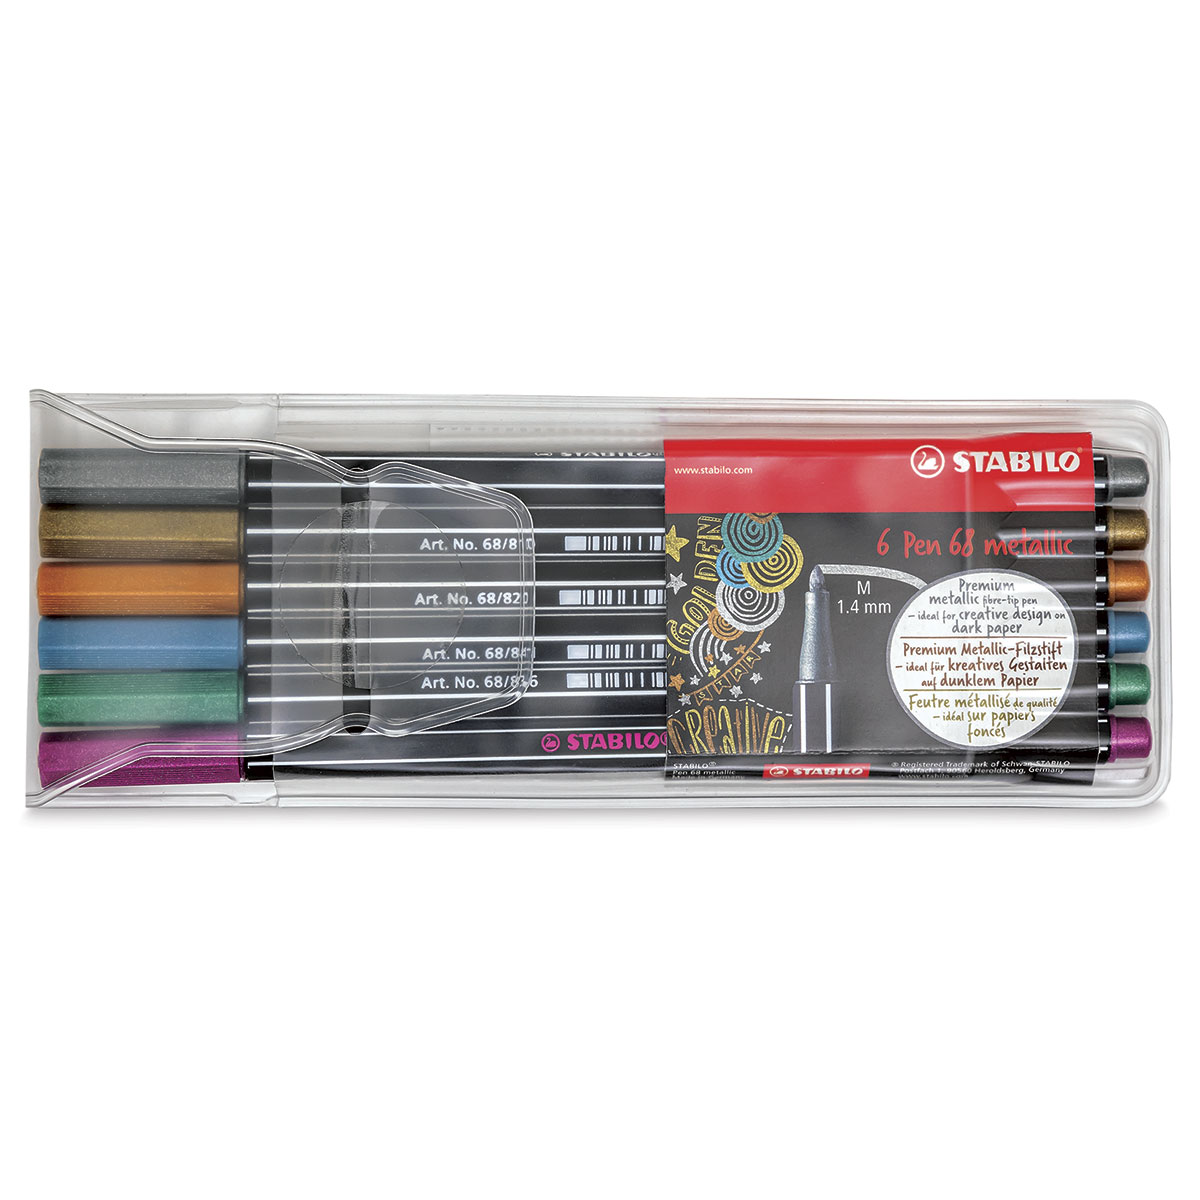 Stabilo 68 Metallic Pens and Sets | BLICK Art Materials